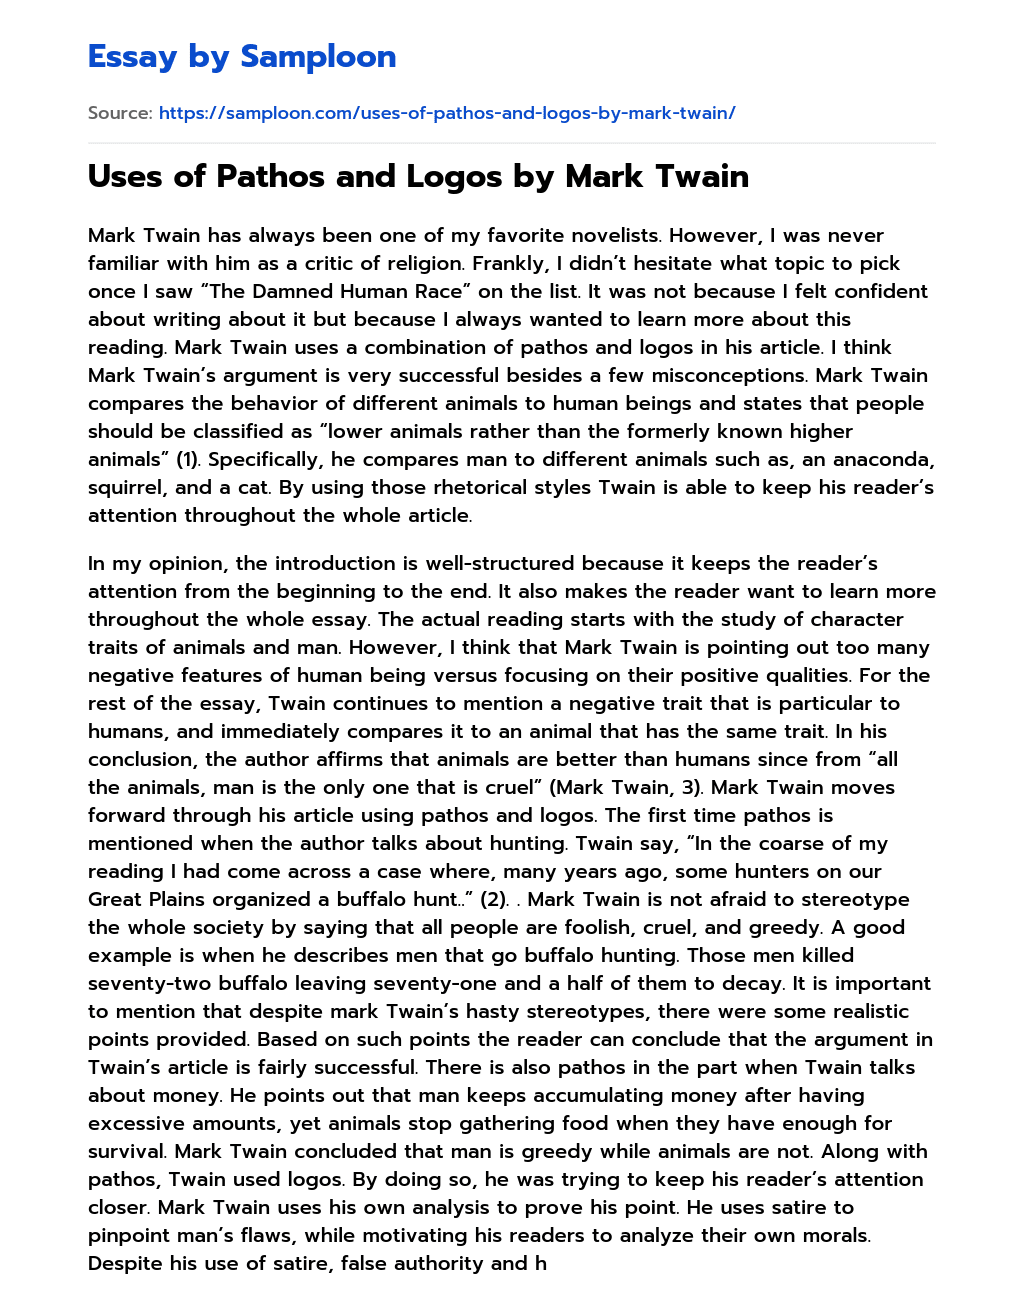 Uses of Pathos and Logos by Mark Twain essay